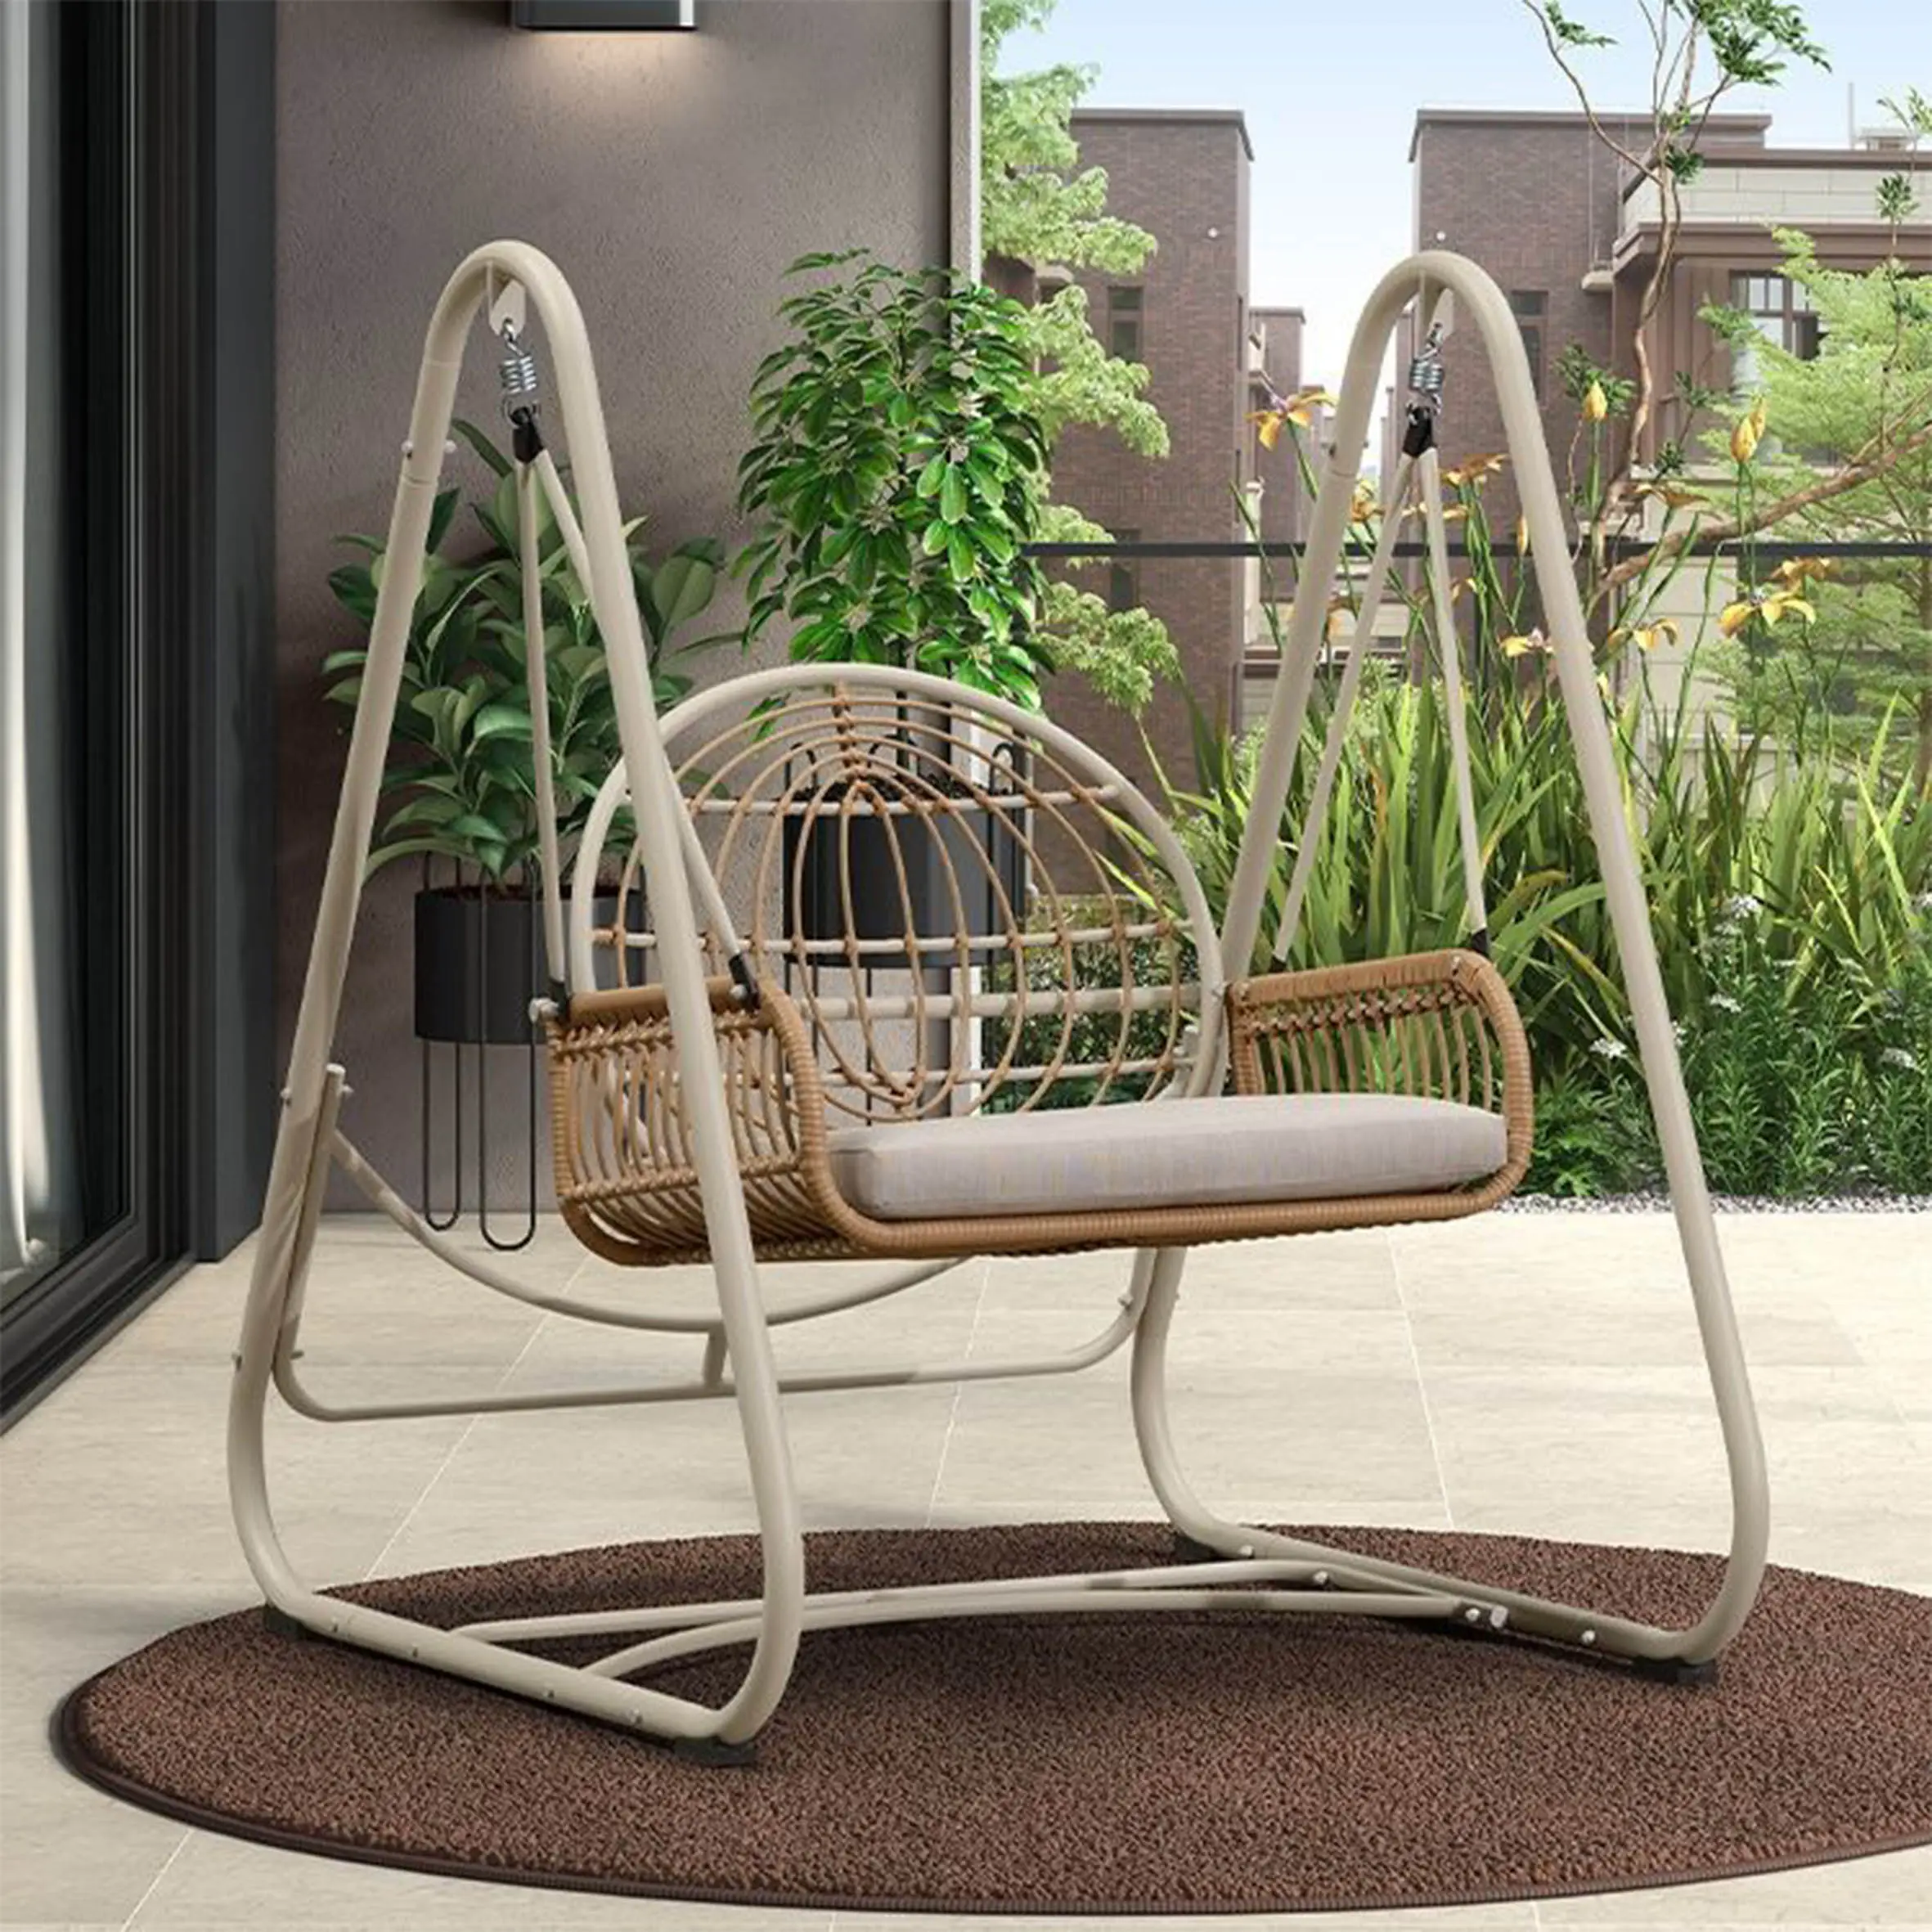 Outdoor swing cradle Chairs garden outdoor two adult balcony swing patio,wrought metal swing hanging basket wicker Chairs/